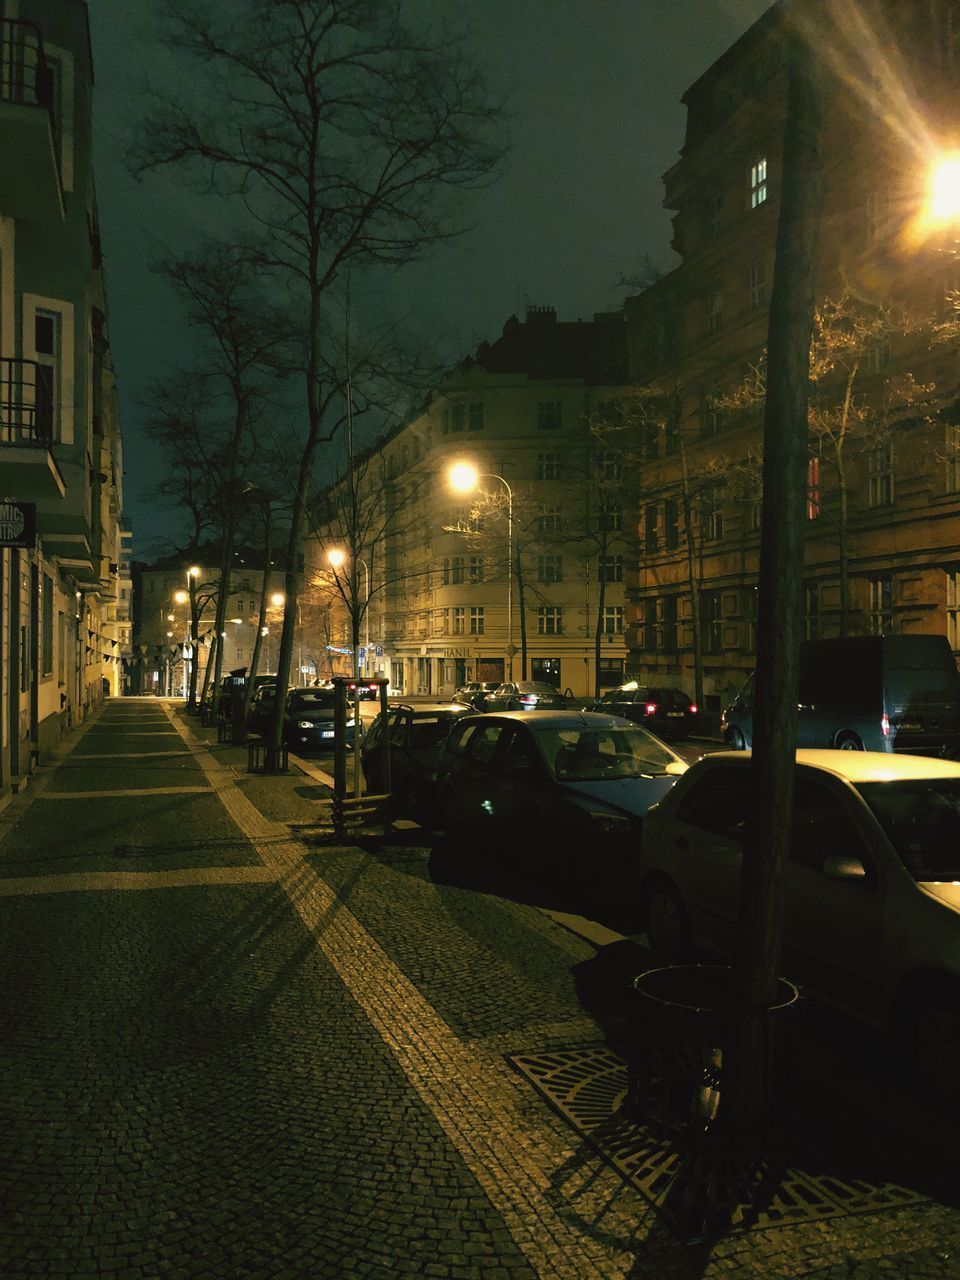 ILLUMINATED CITY STREET AT NIGHT